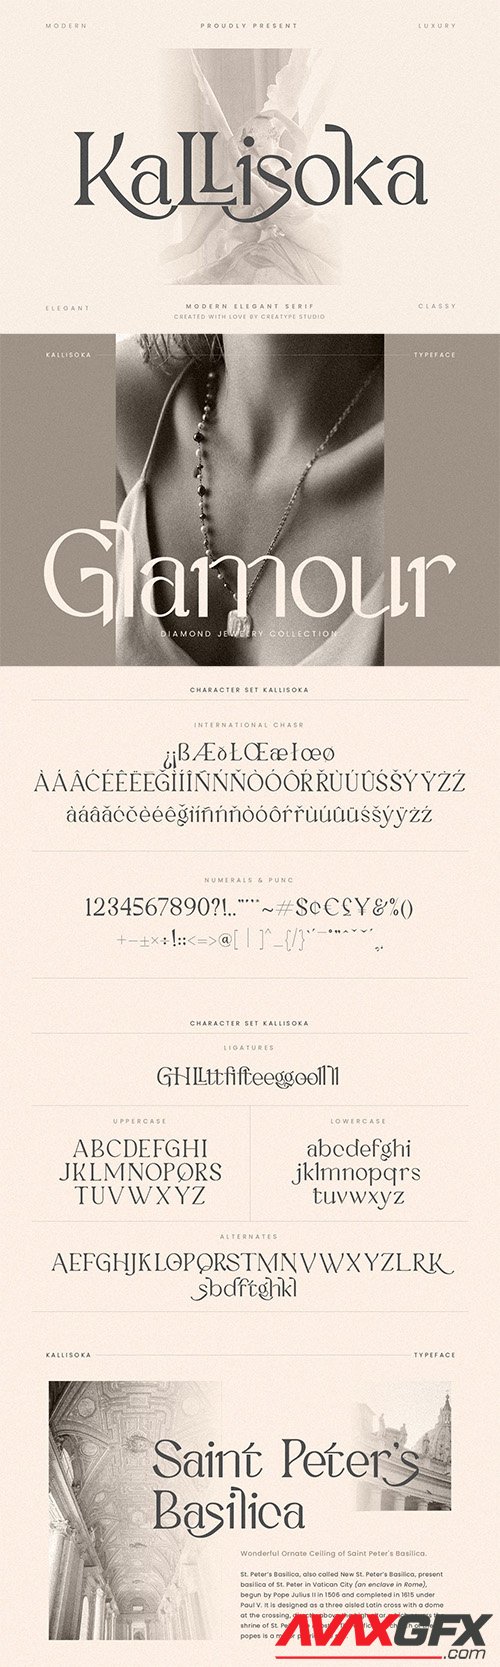 Kallisoka Modern Elegant Serif